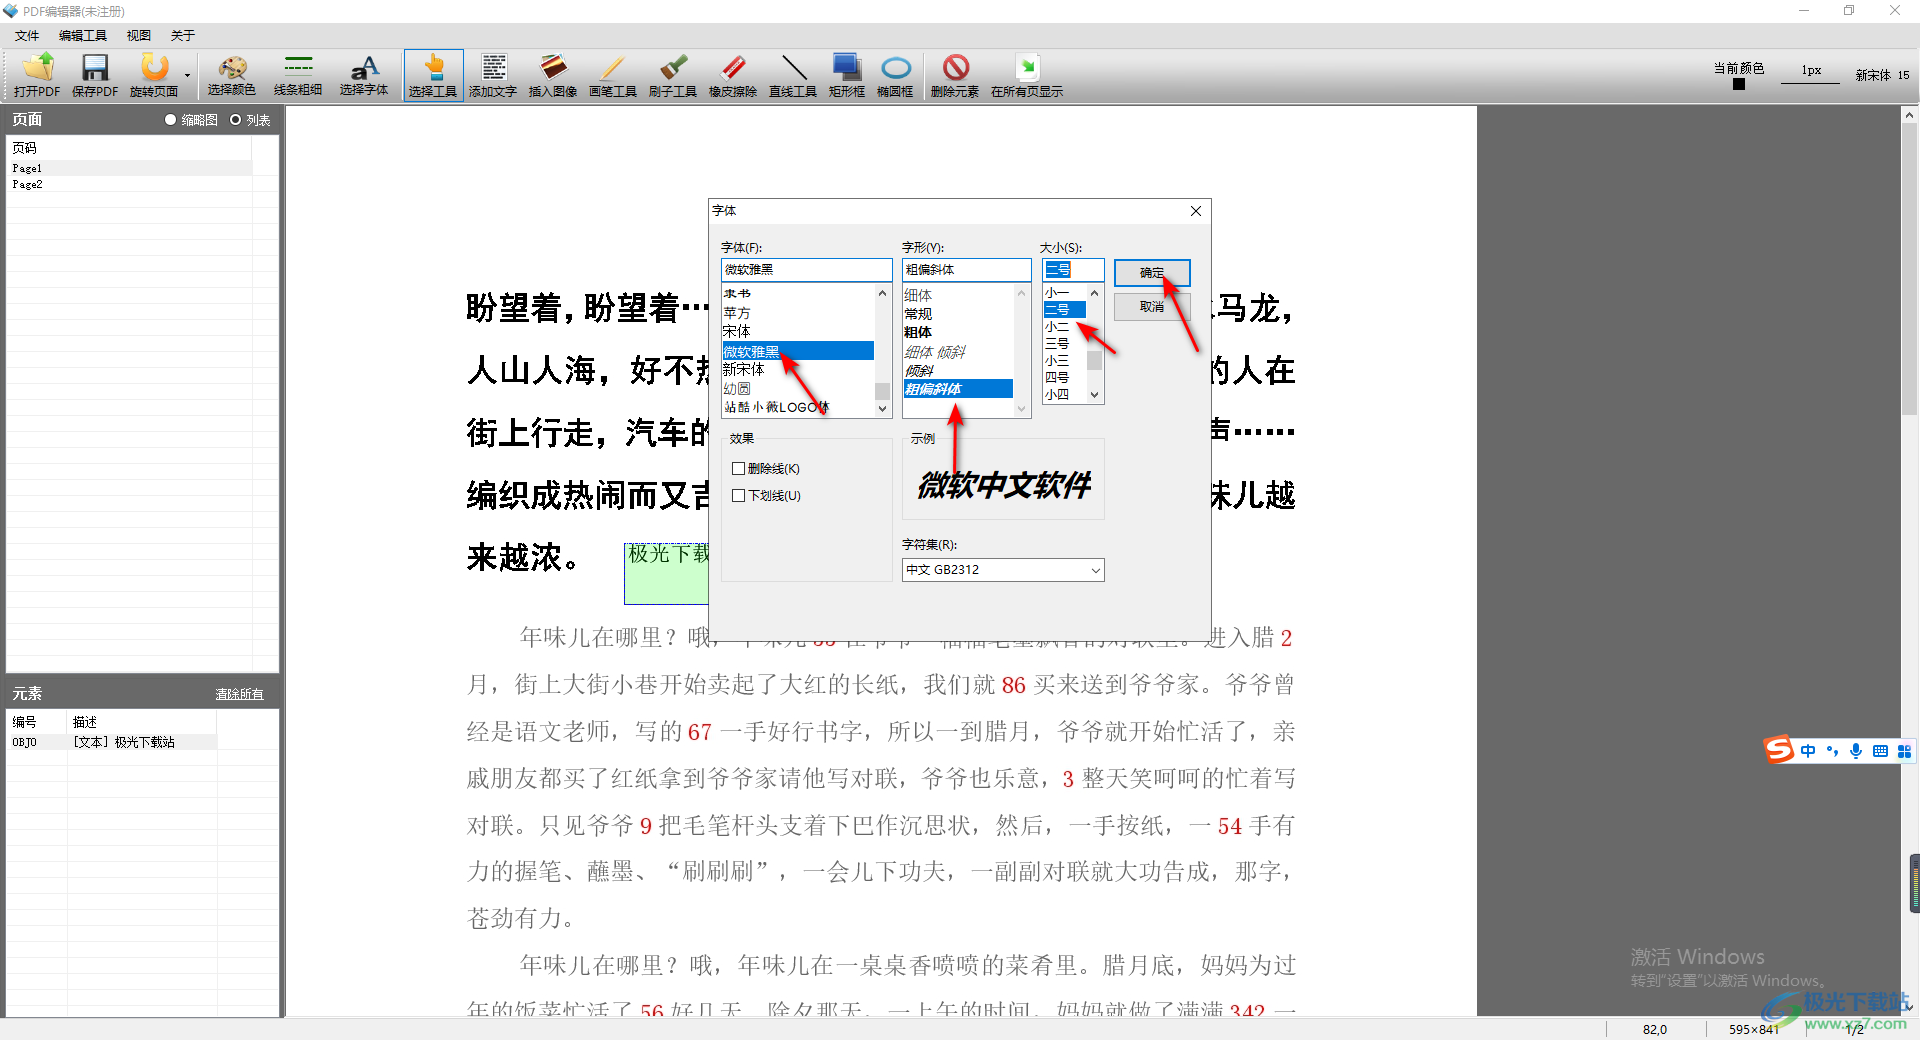 FontLab 7 for Mac(字体编辑器) 7.1.0.7363 - 知乎